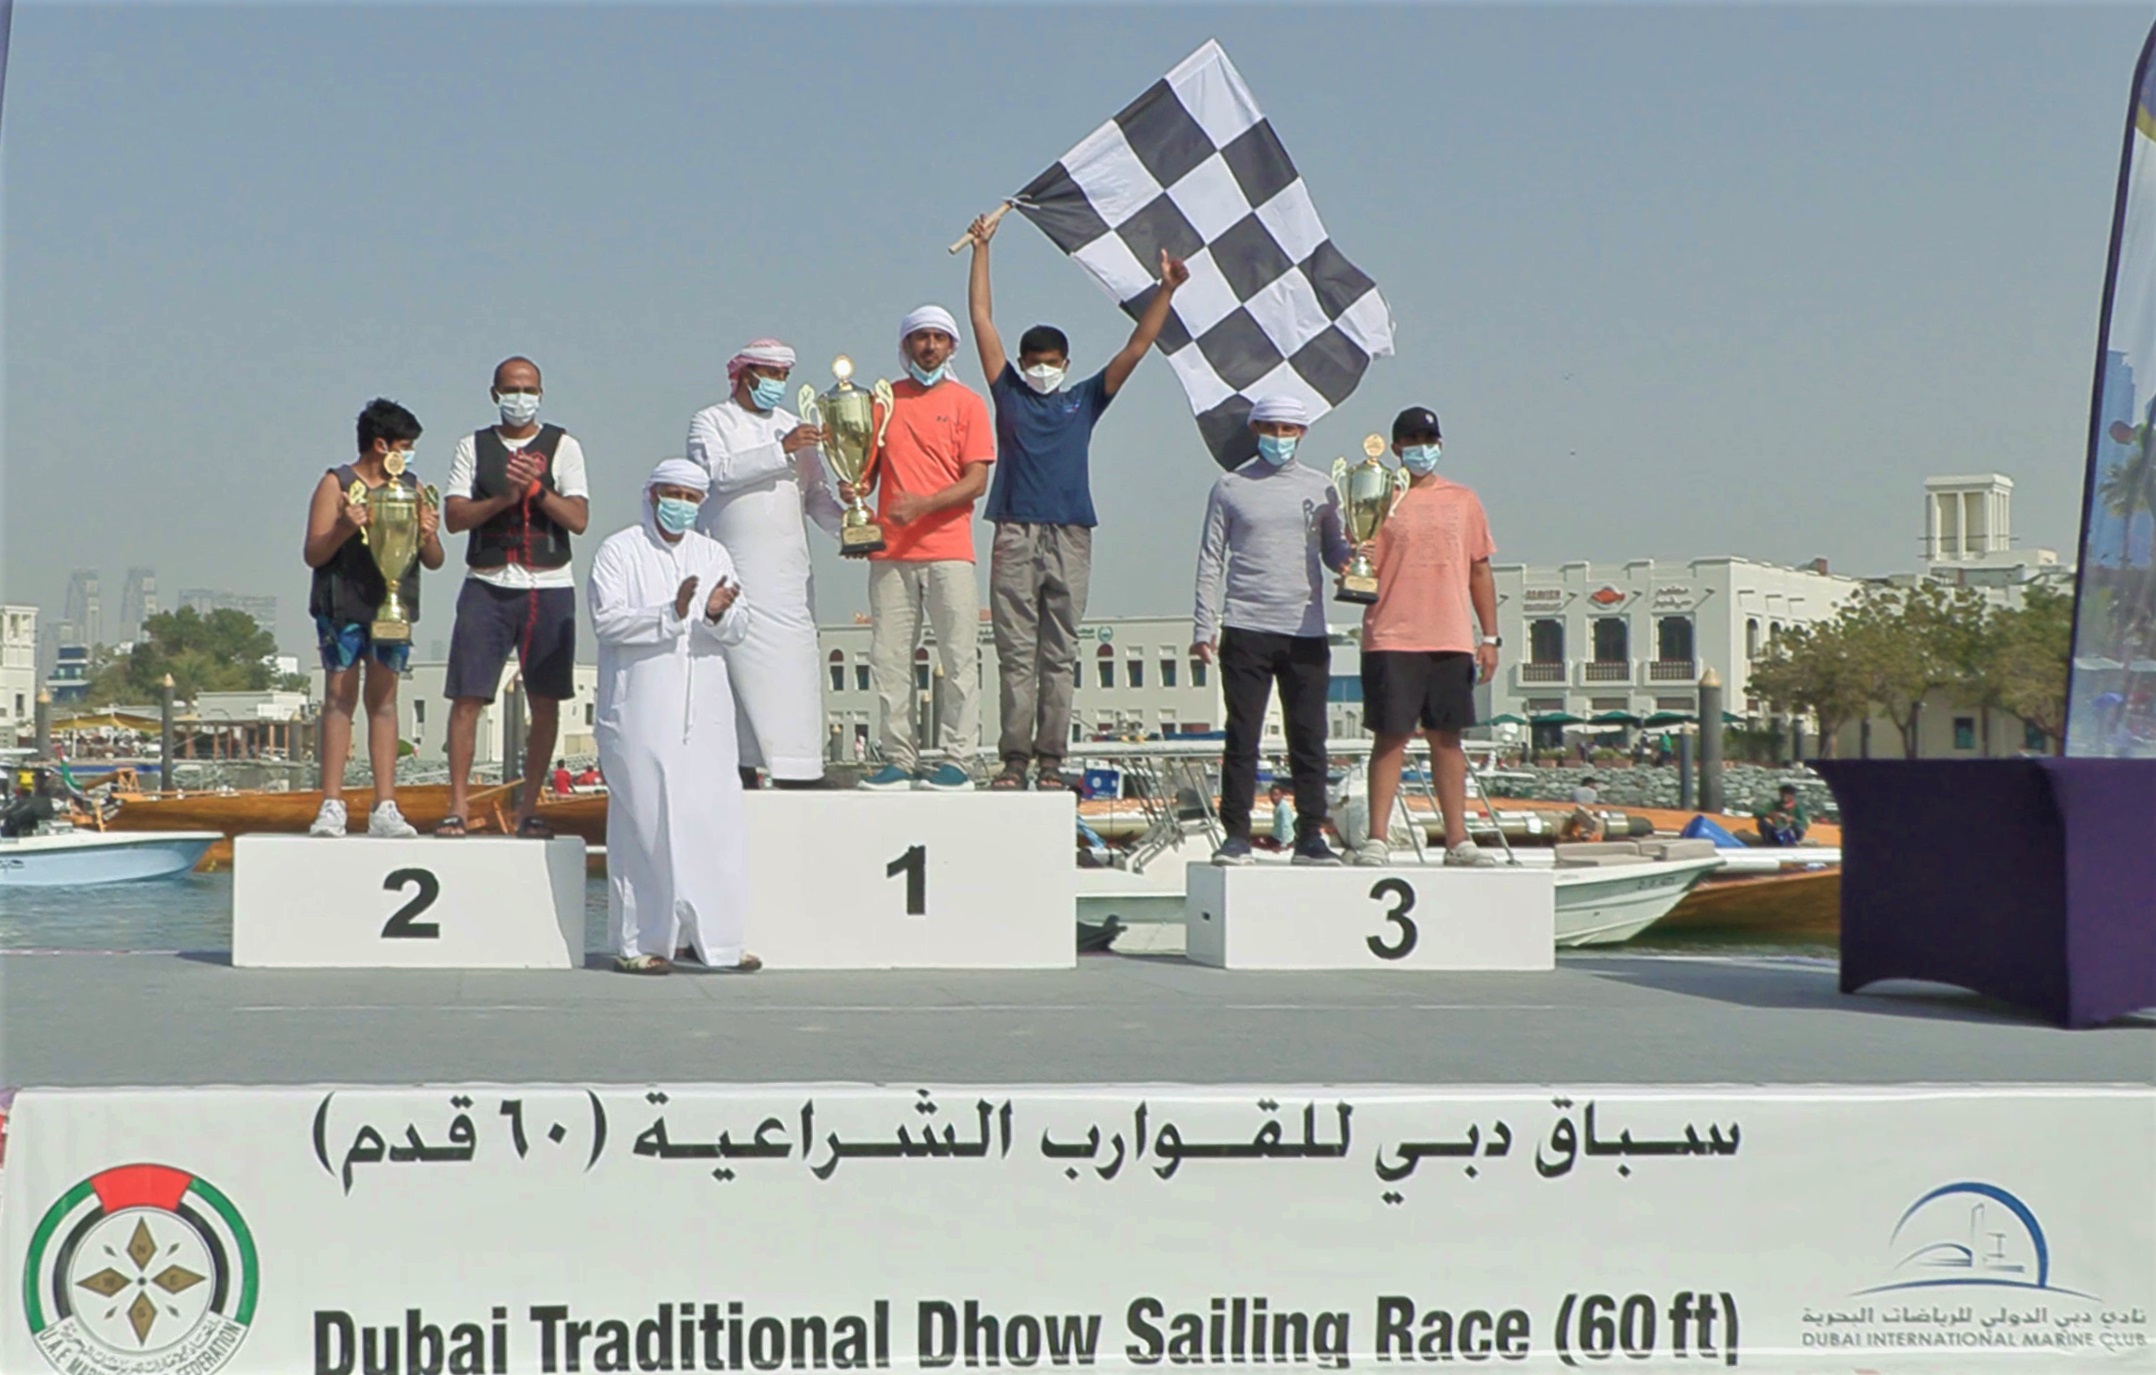 "(Hasheem 199) by Zayed bin Hamdan champion of the 60ft Dhow Sailing Race